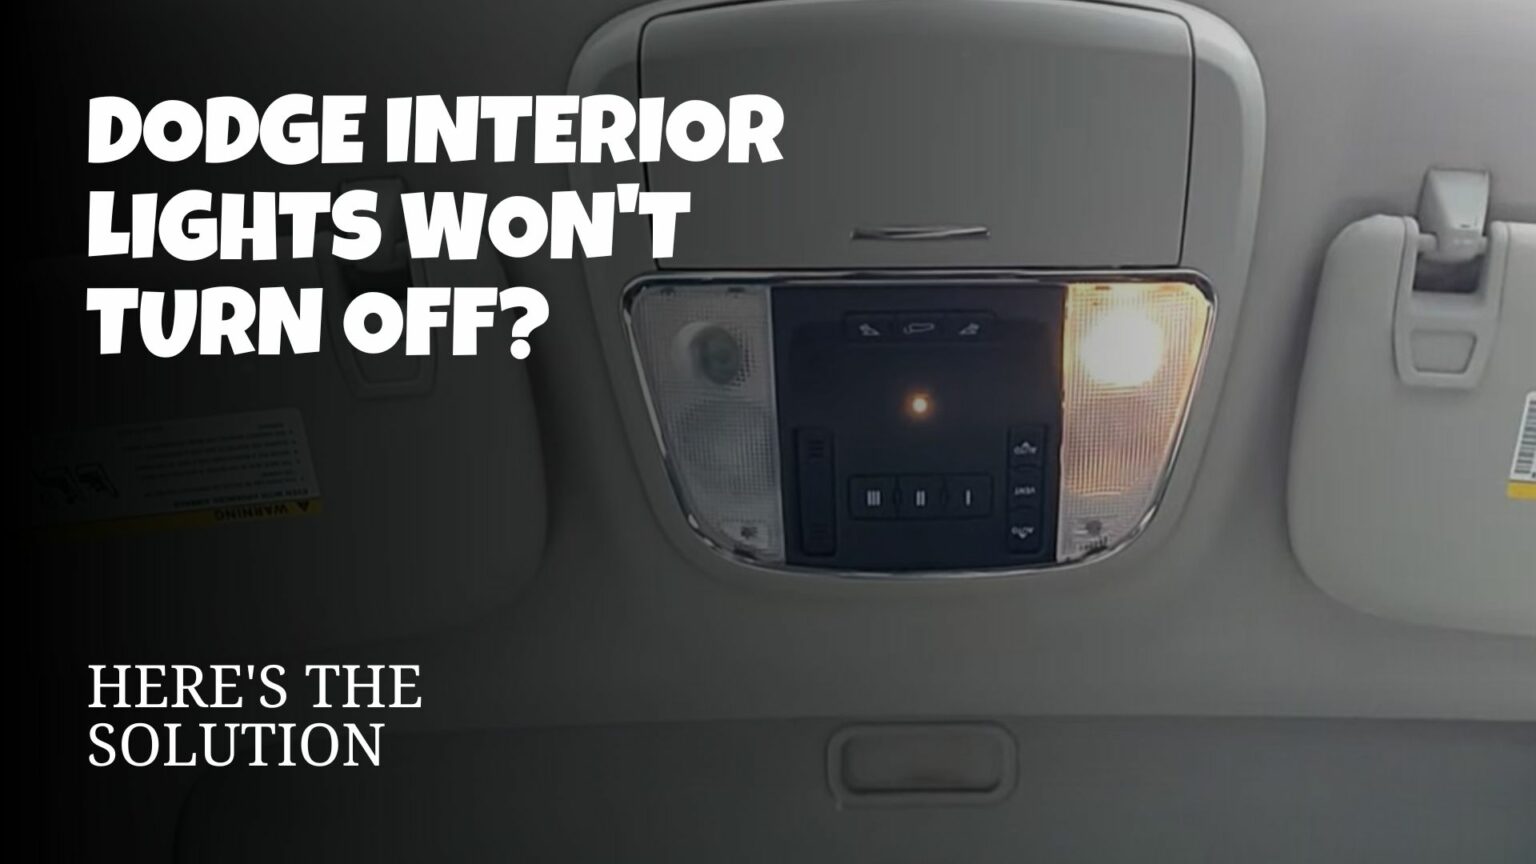 2009 dodge journey interior lights won't turn off